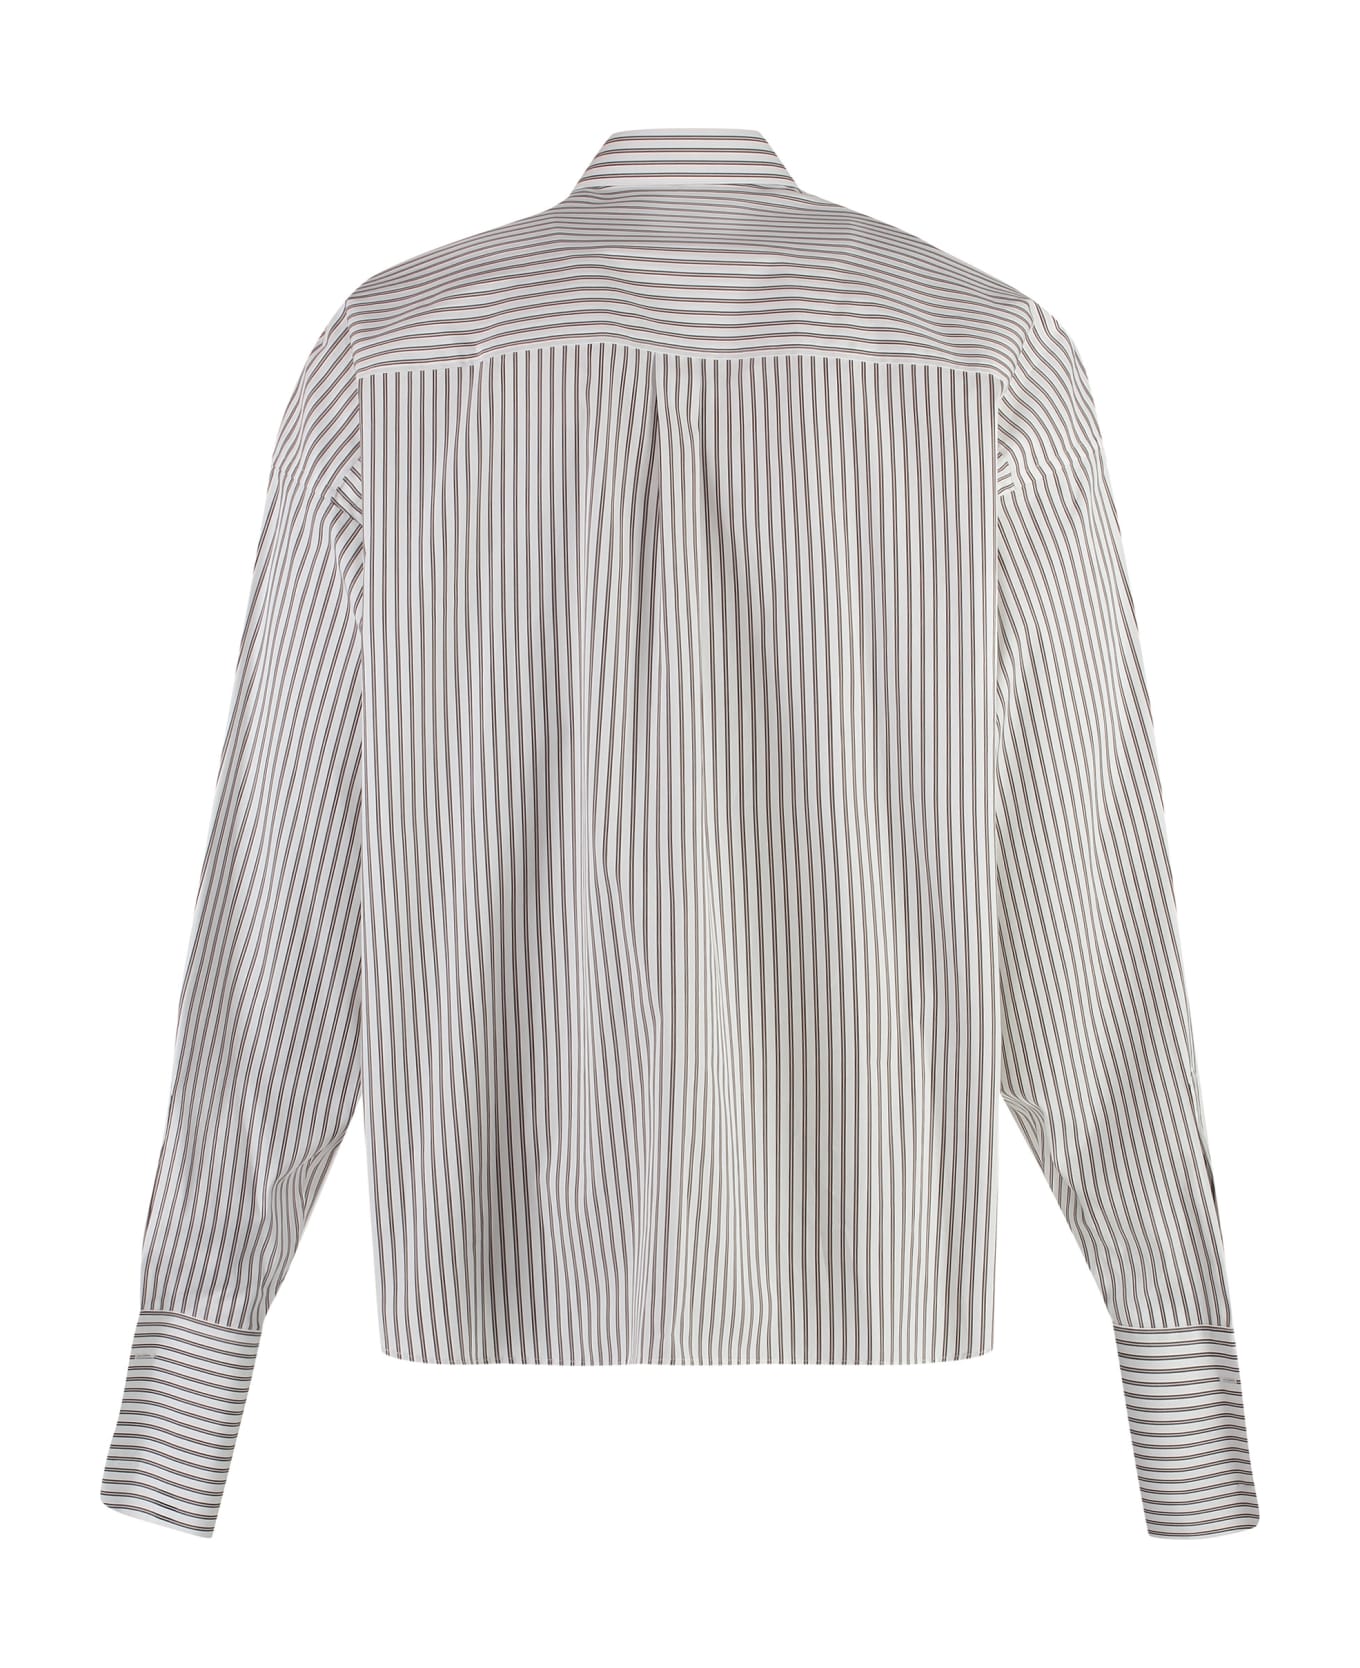 Dolce & Gabbana Striped Cotton Shirt - Rigato